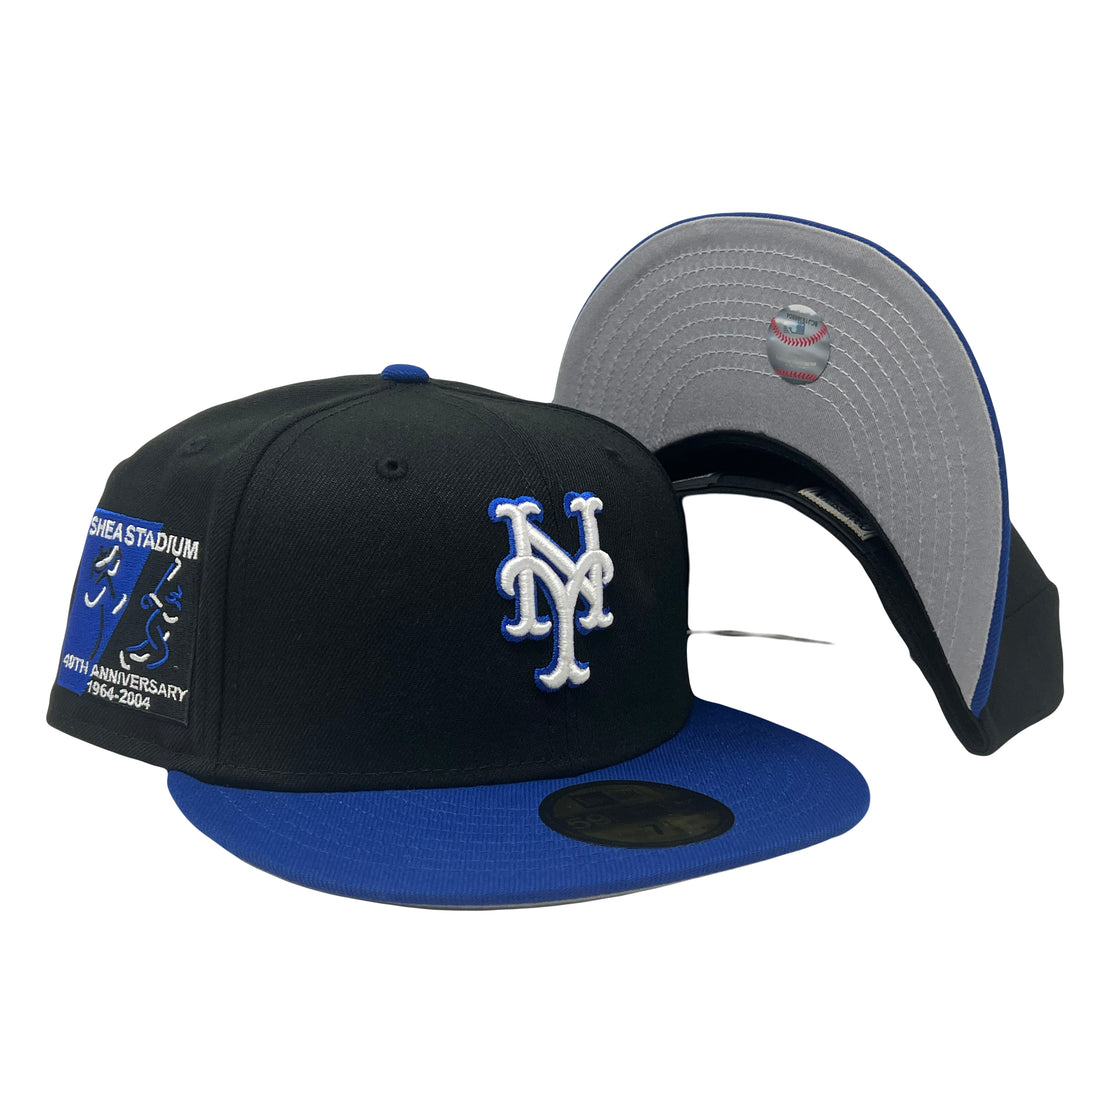 New York Mets Shea Stadium 40th Anniversary Black Royal New Era Fitted Hat